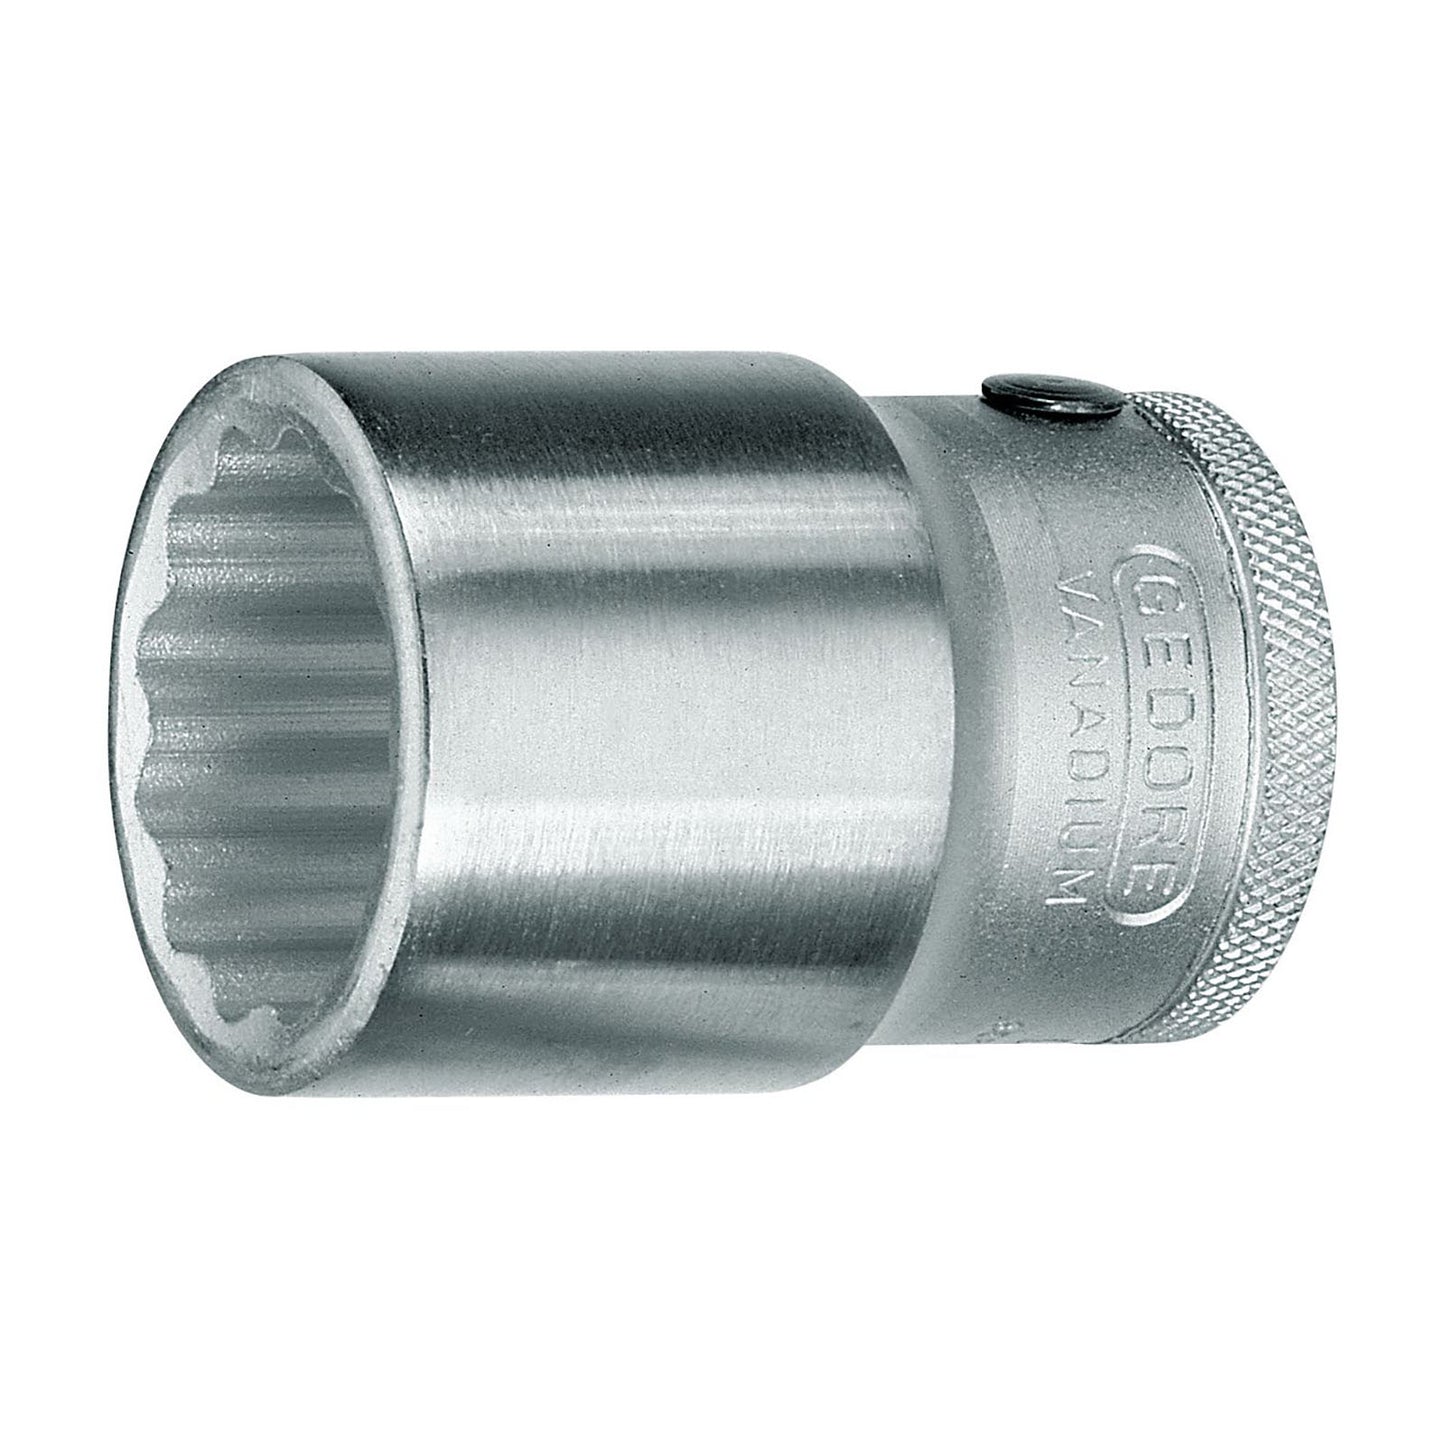 GEDORE D 32 46 - Vaso Unit Drive 3/4", 46 mm (6273130)